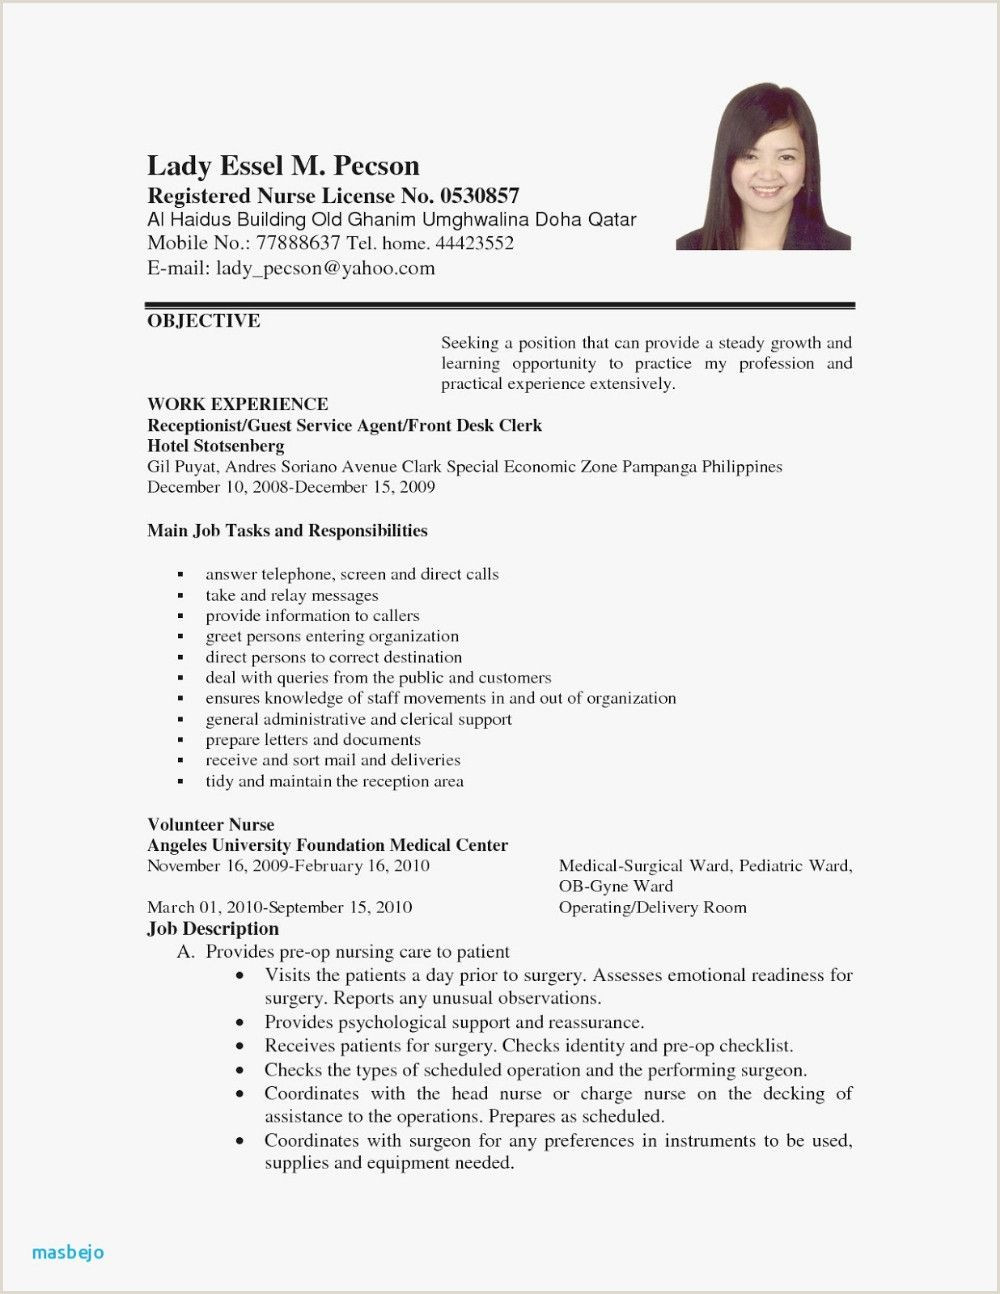 Sample Resume for Waitress with Experience Waitress Resume Job Description Job Resume Examples, Resume …